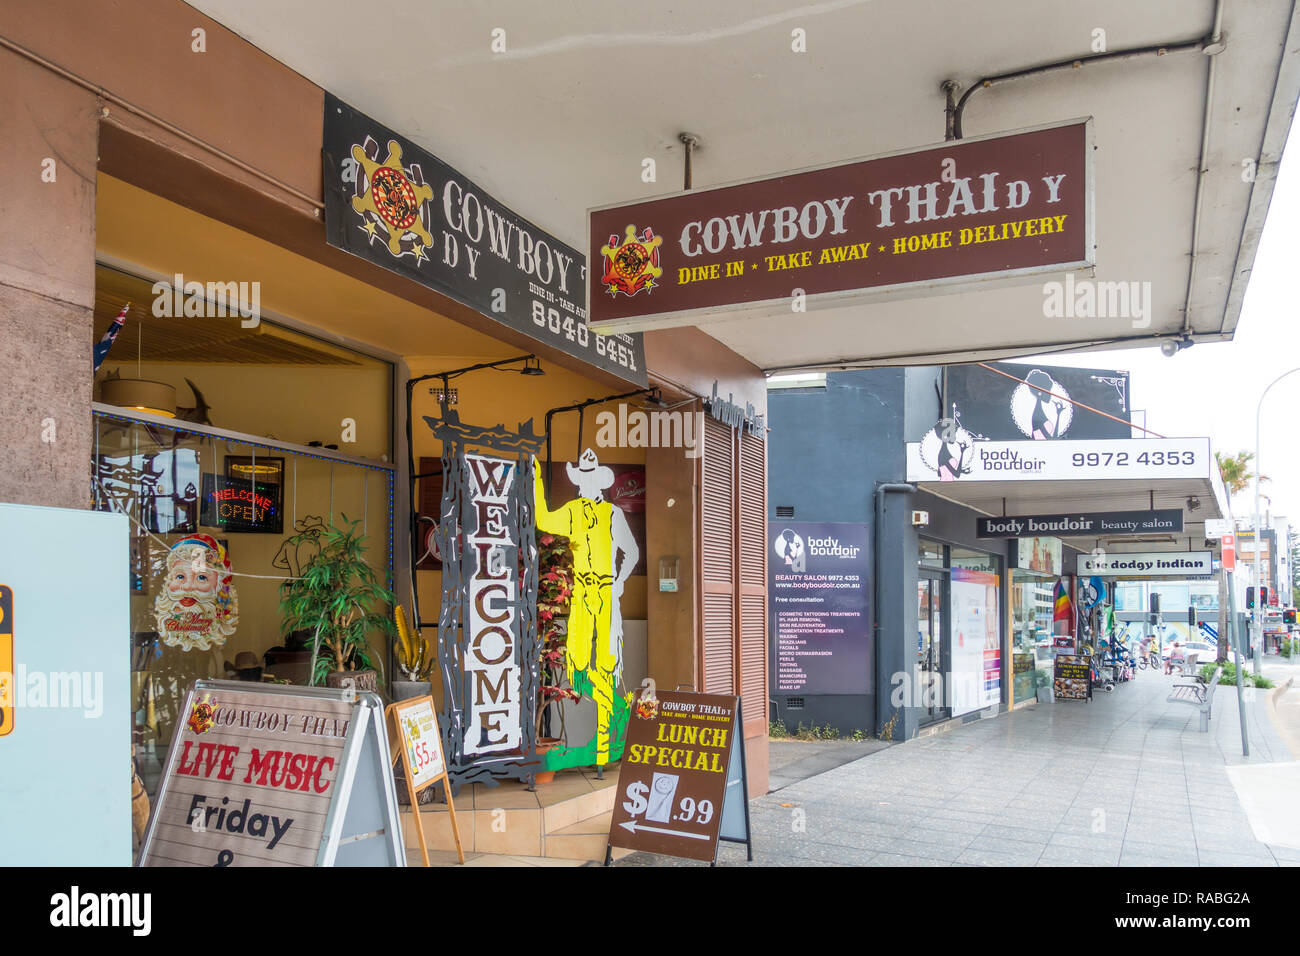 Cowboy Thai Restaurant. Sydney suburb Dee Why Stock Photo